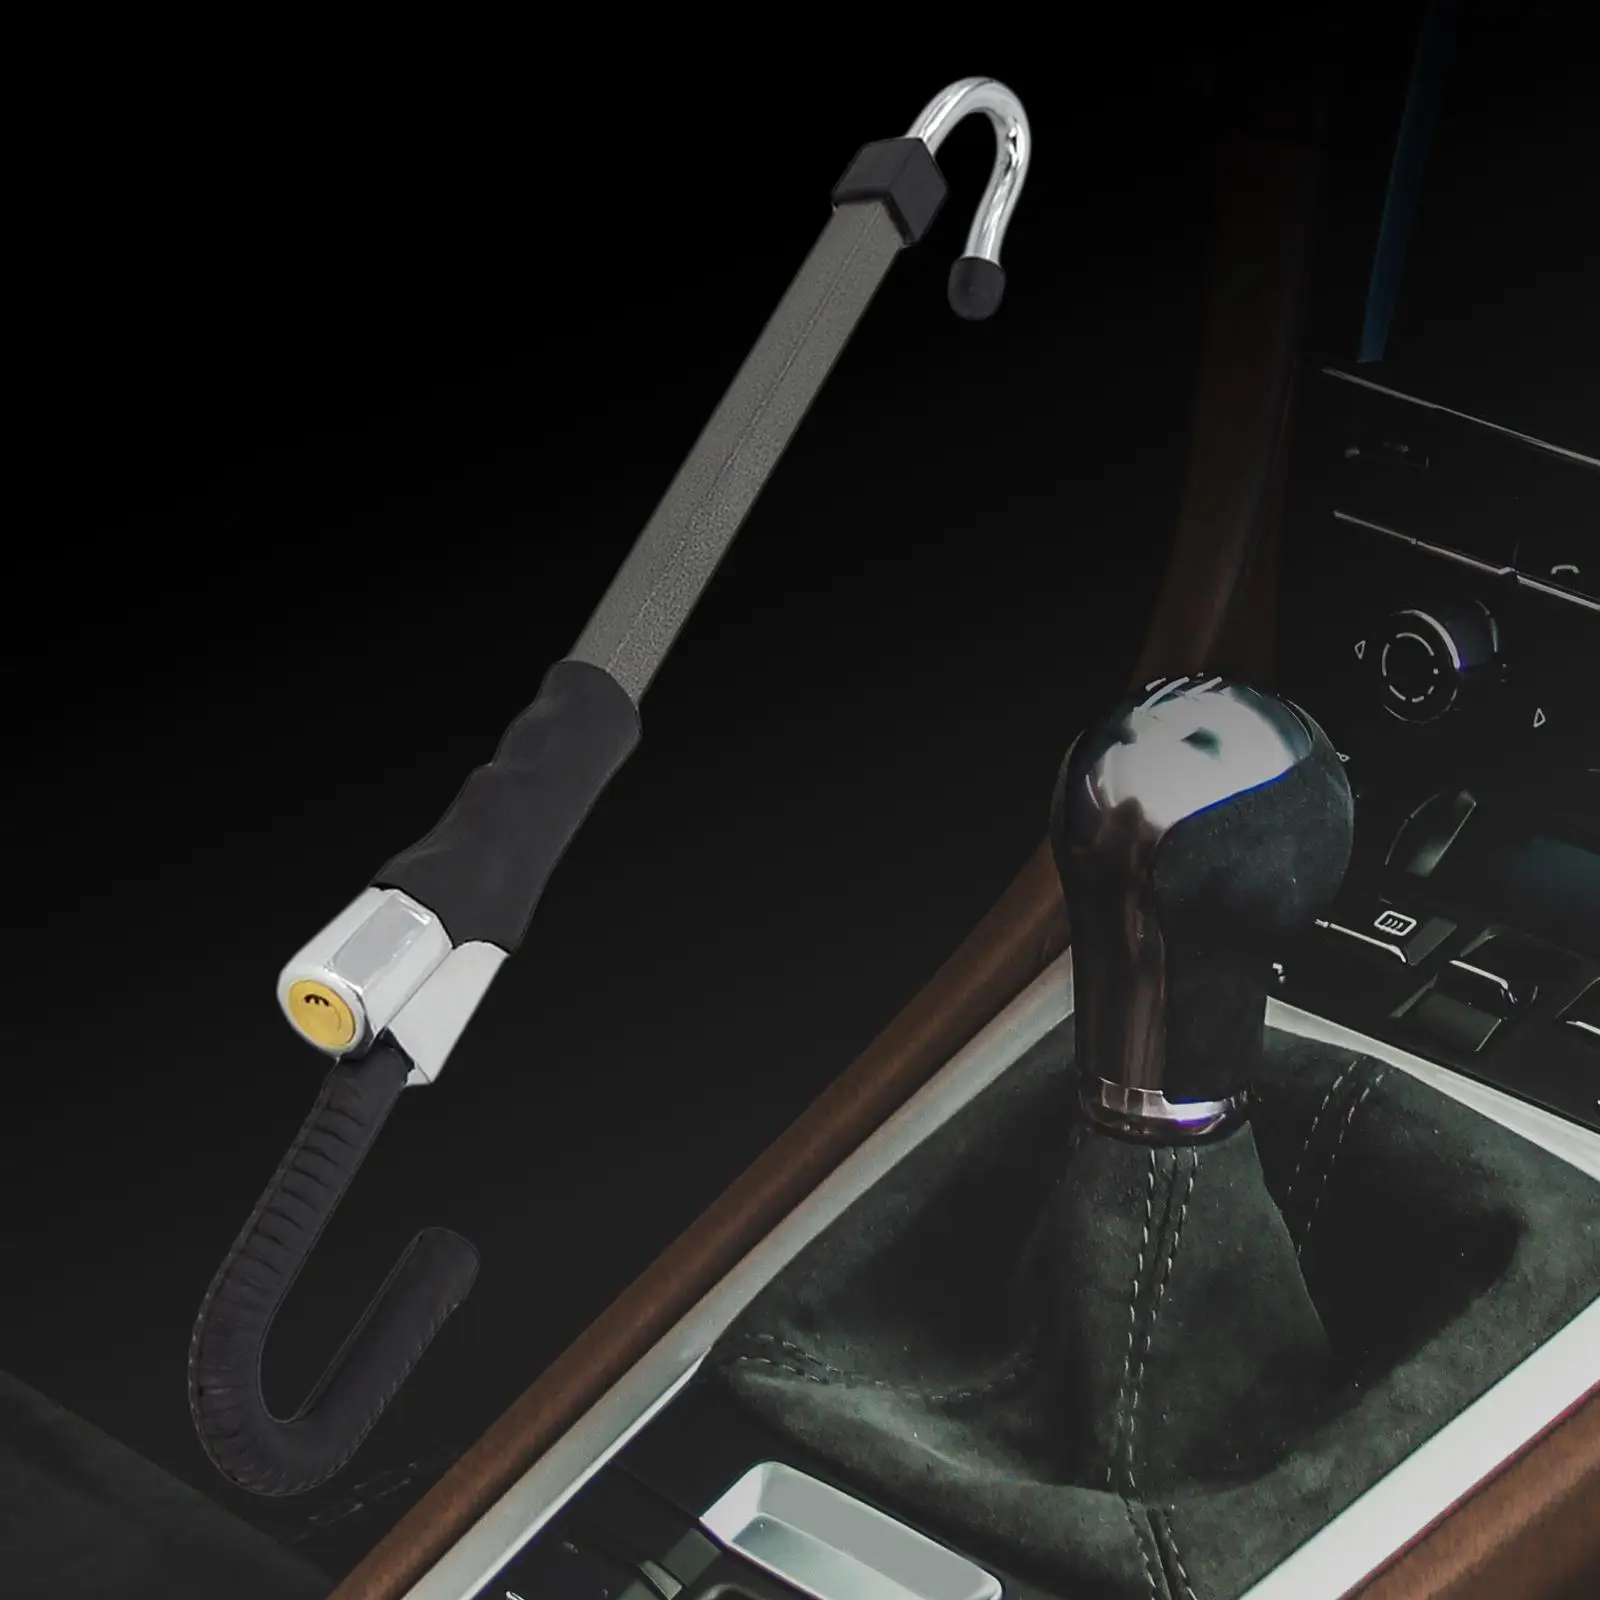 Automotive Car Steering Wheel Brake Lock Adjustable Length Sturdy Universal